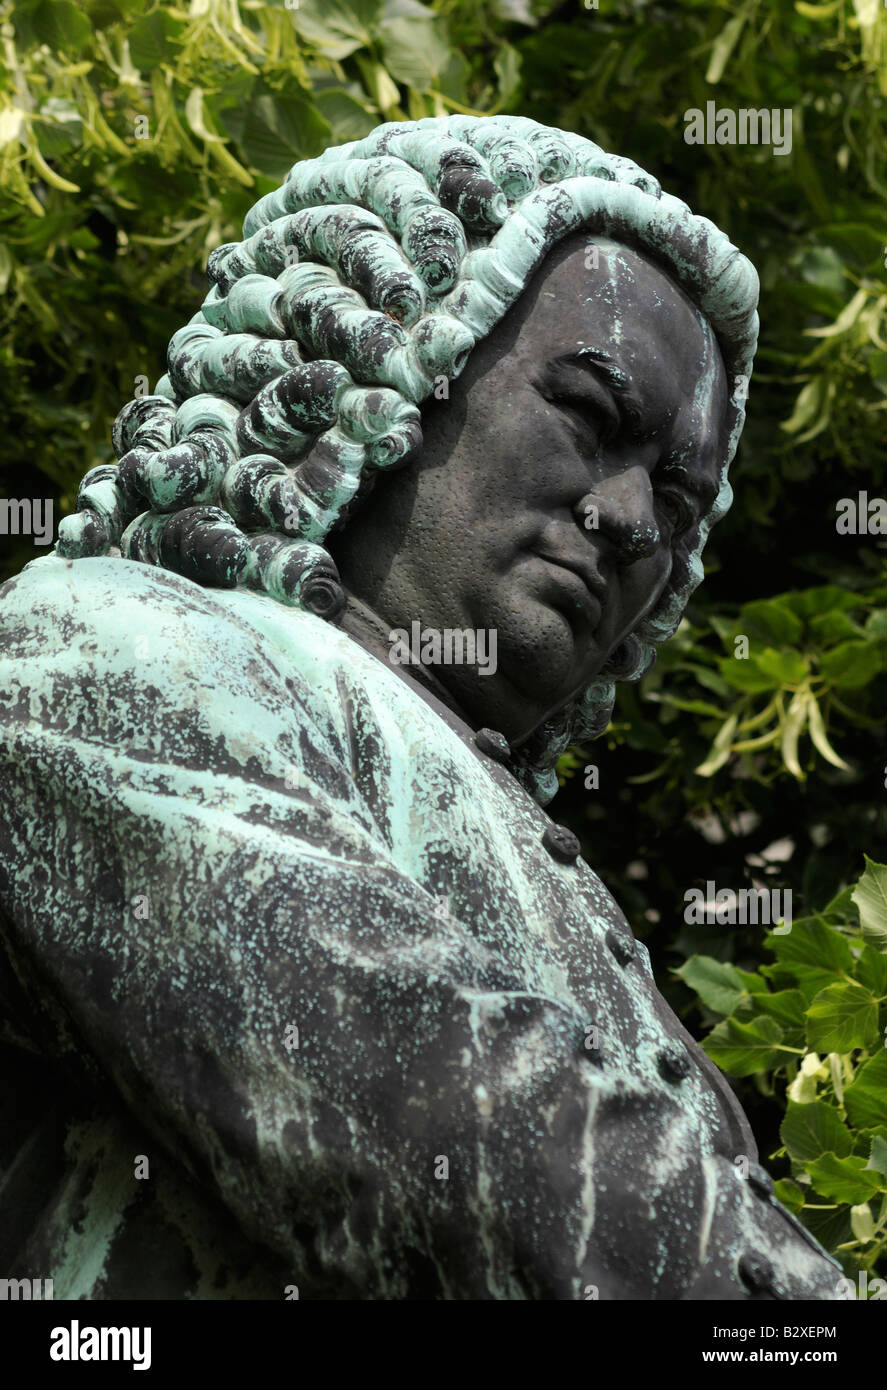 Statue of German composer Johann Sebastian Bach, Eisenach, Germany Stock Photo